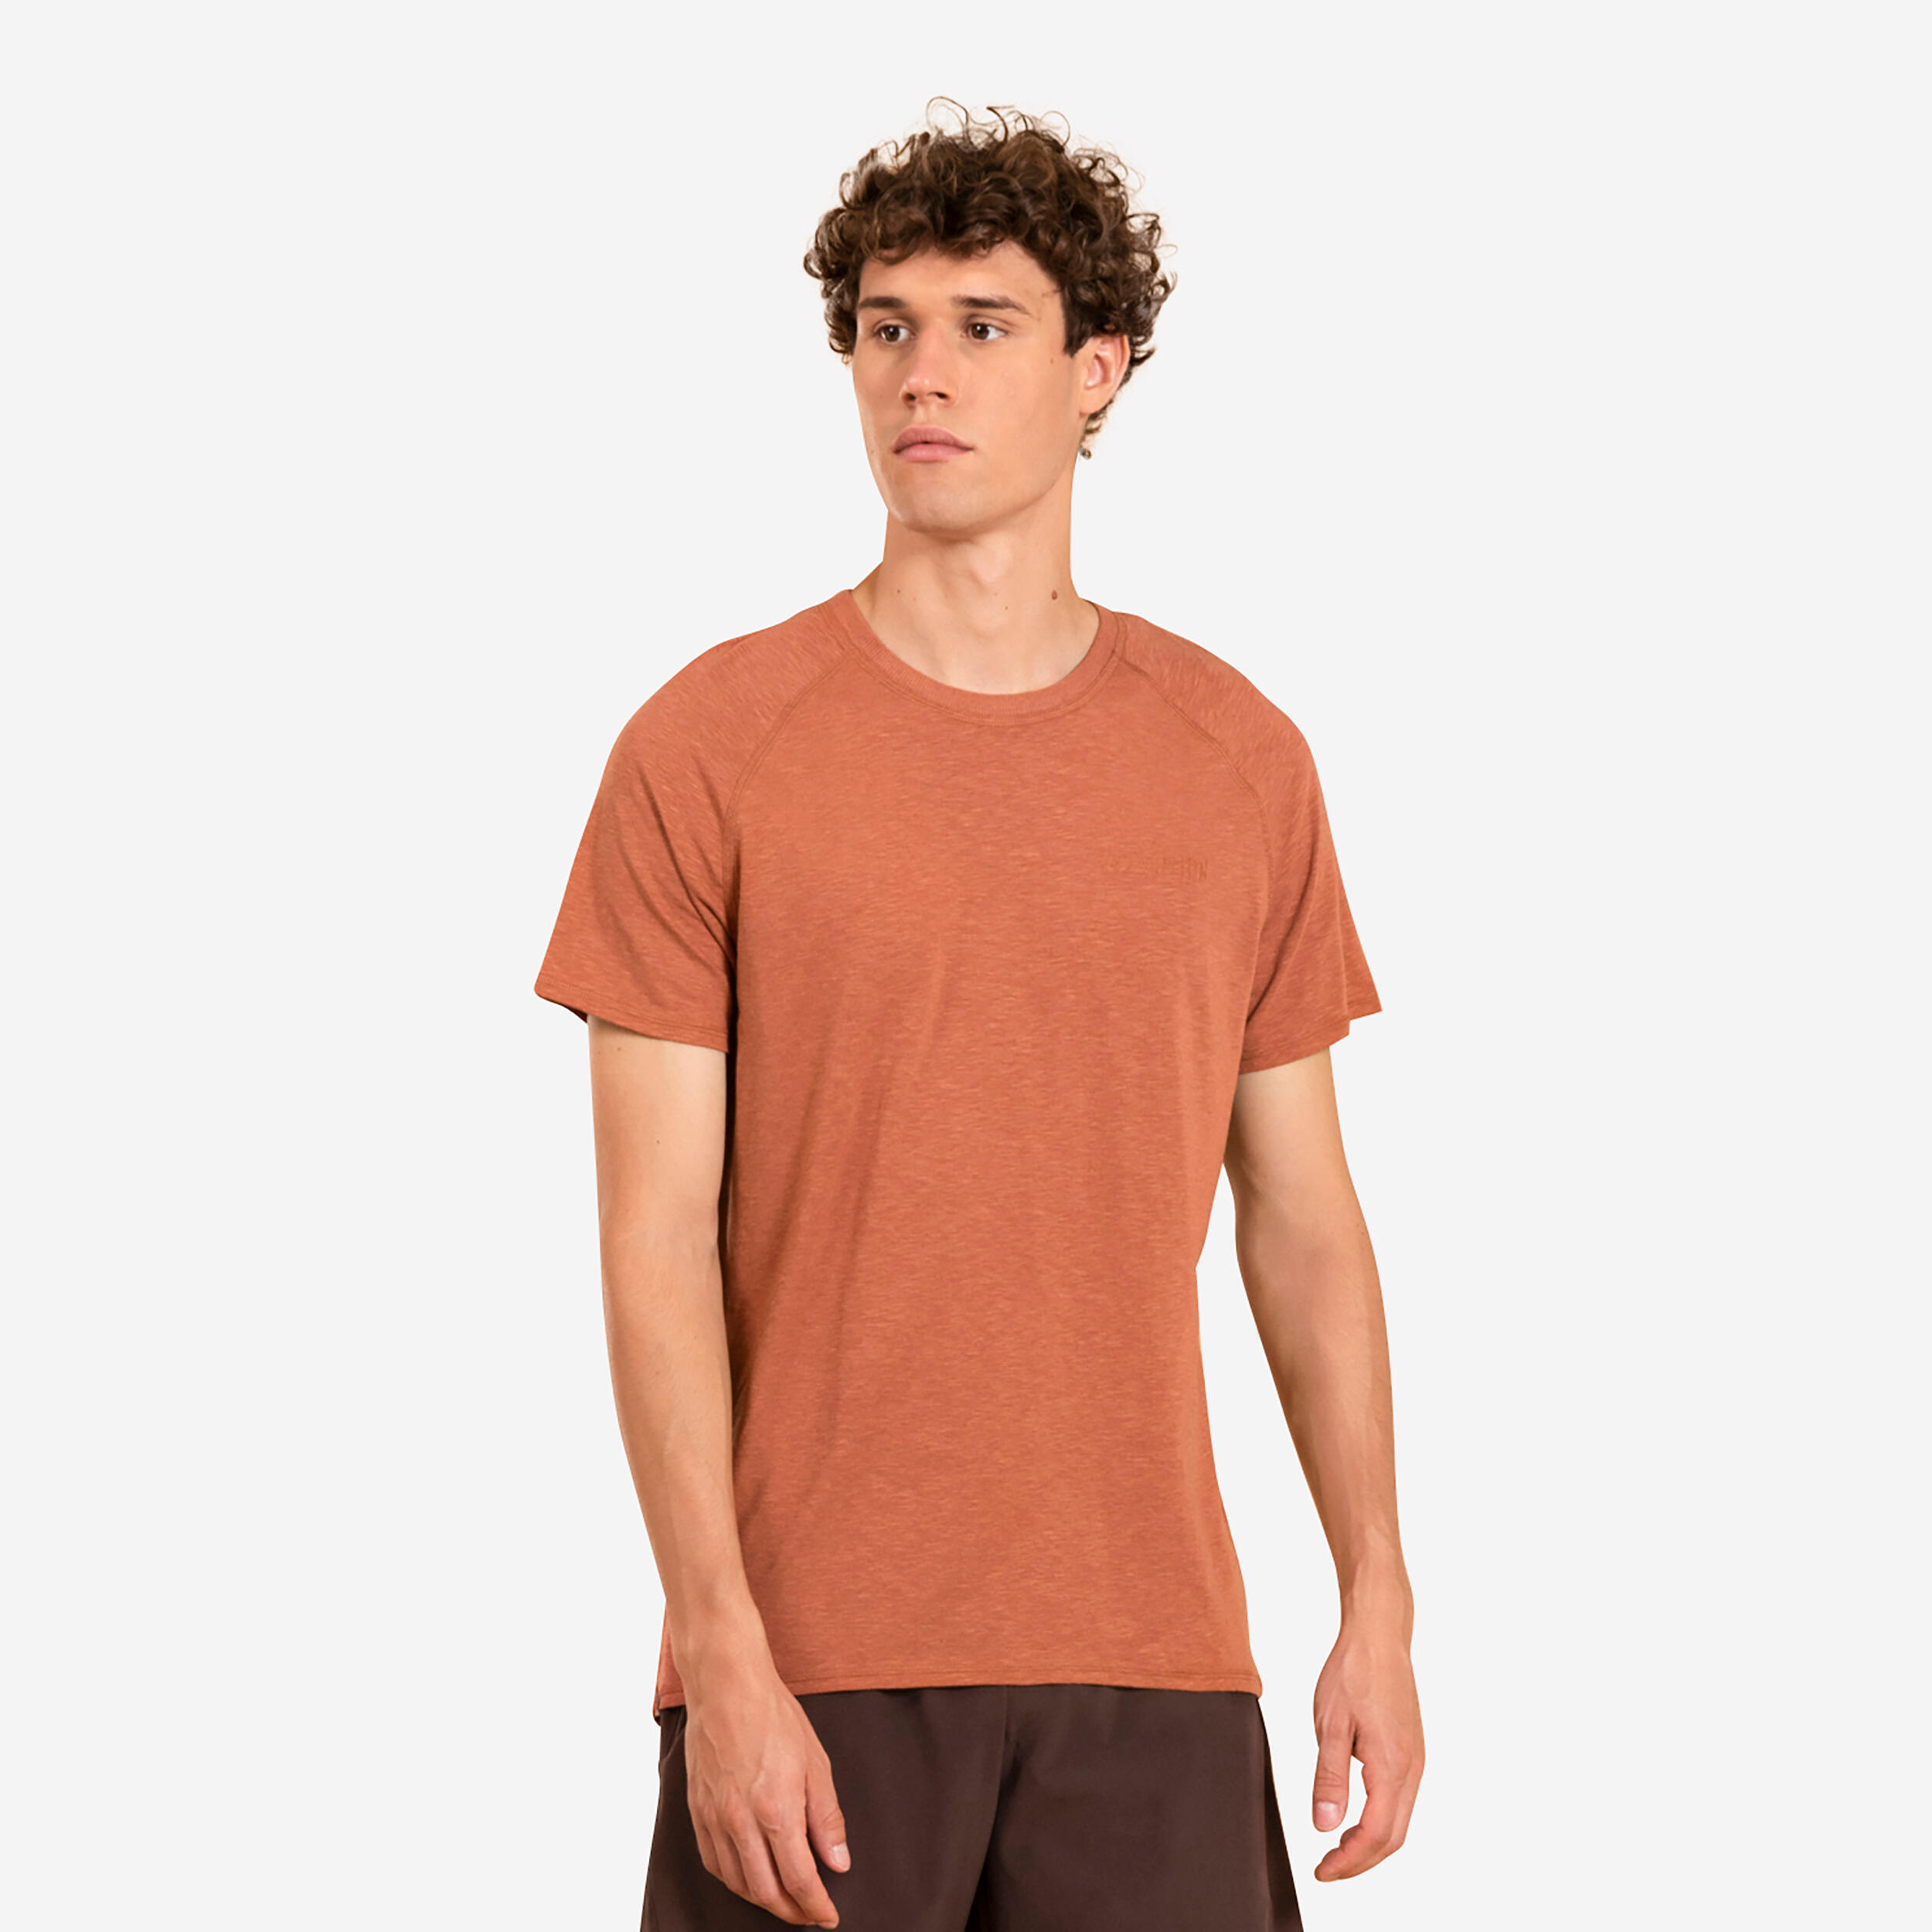 Men's Short-Sleeved Gentle Yoga T-Shirt in Fabric - Terracotta 3/5